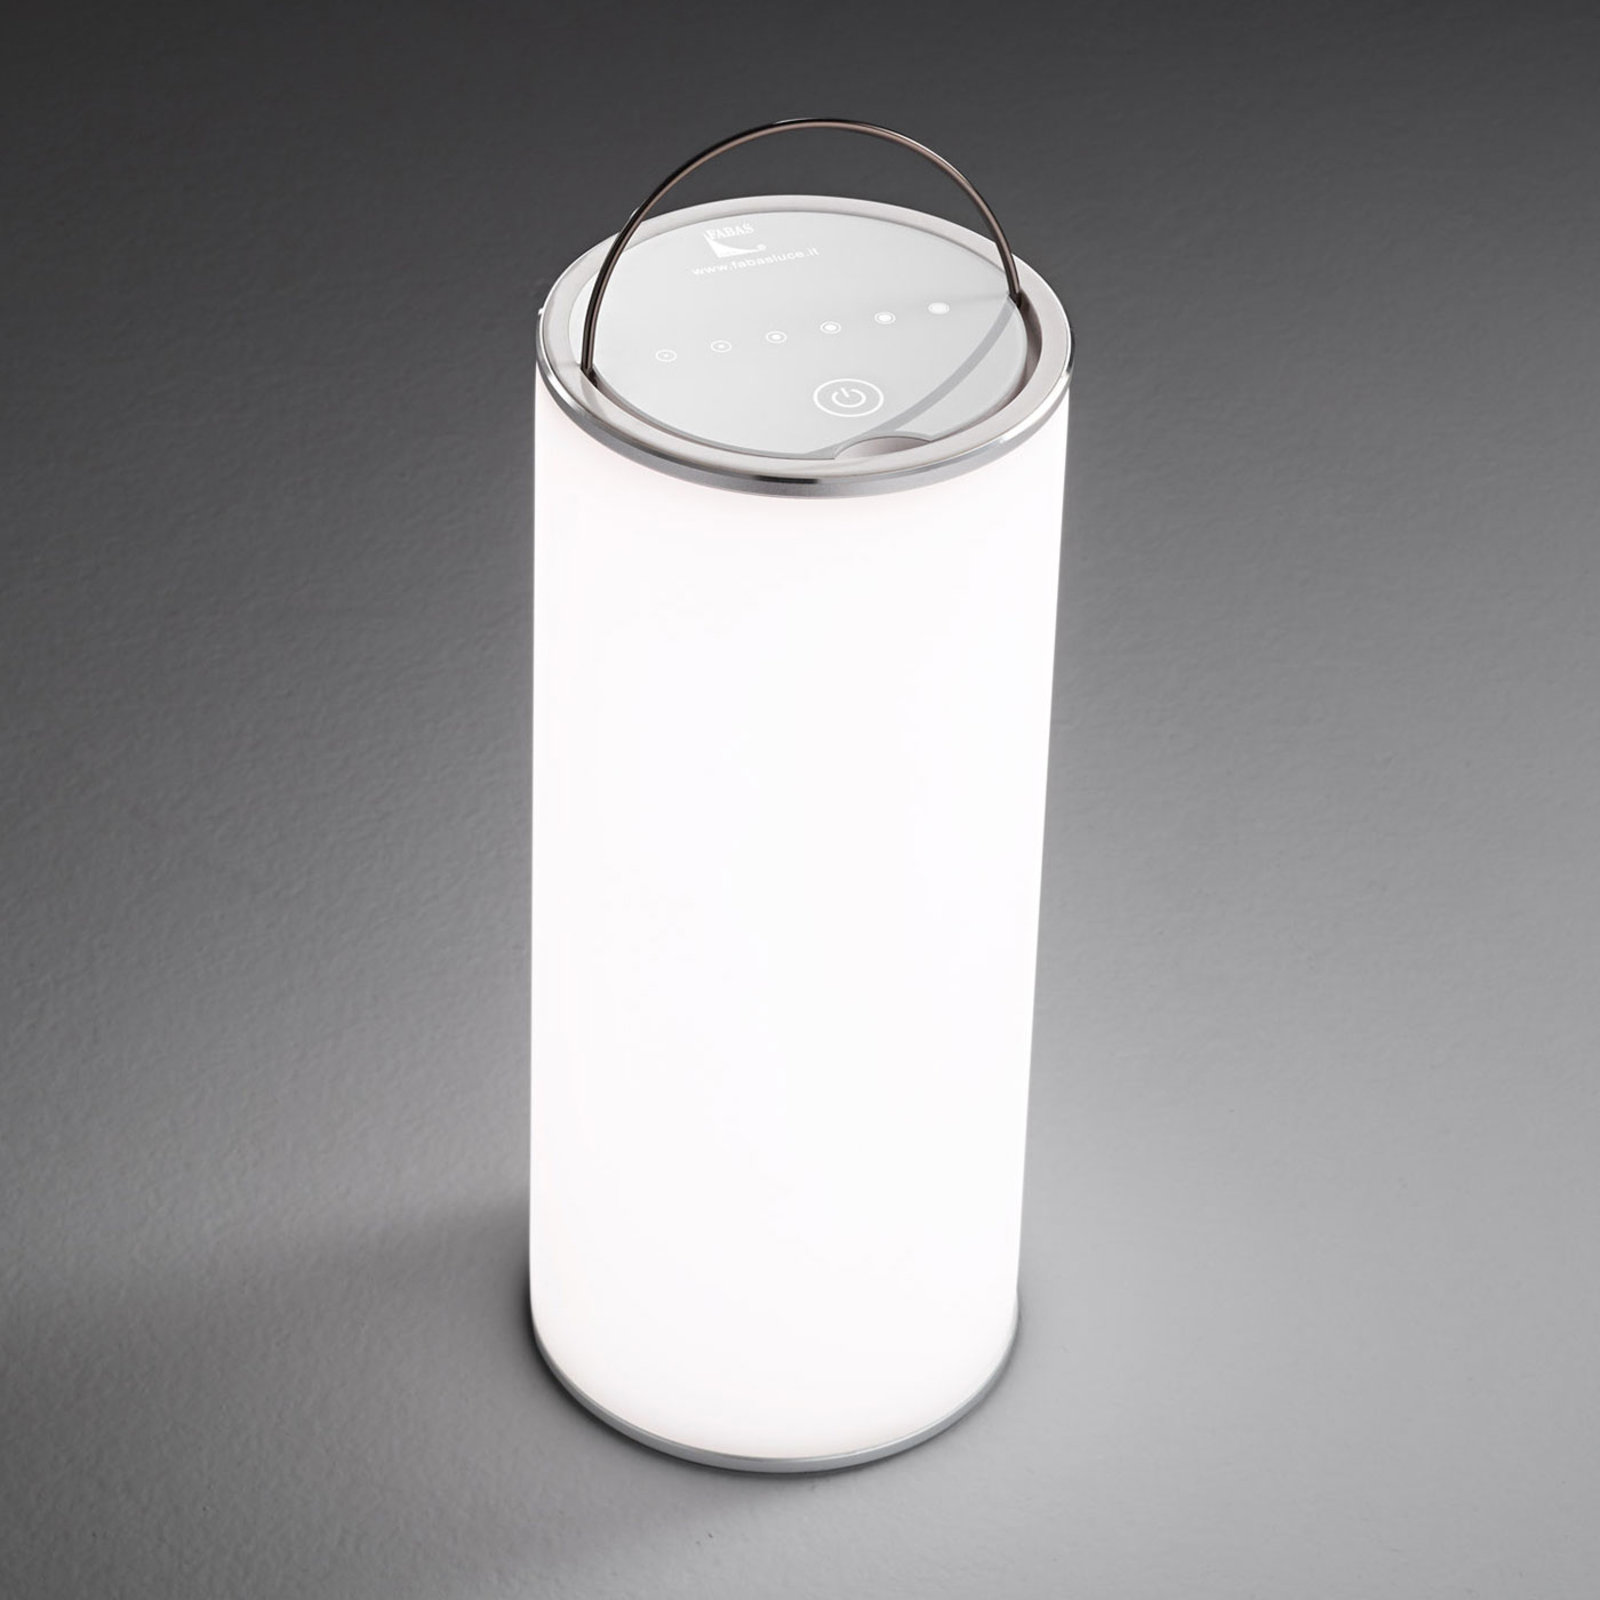 LED-bordlampe Thalia med vendbart lys, hvit